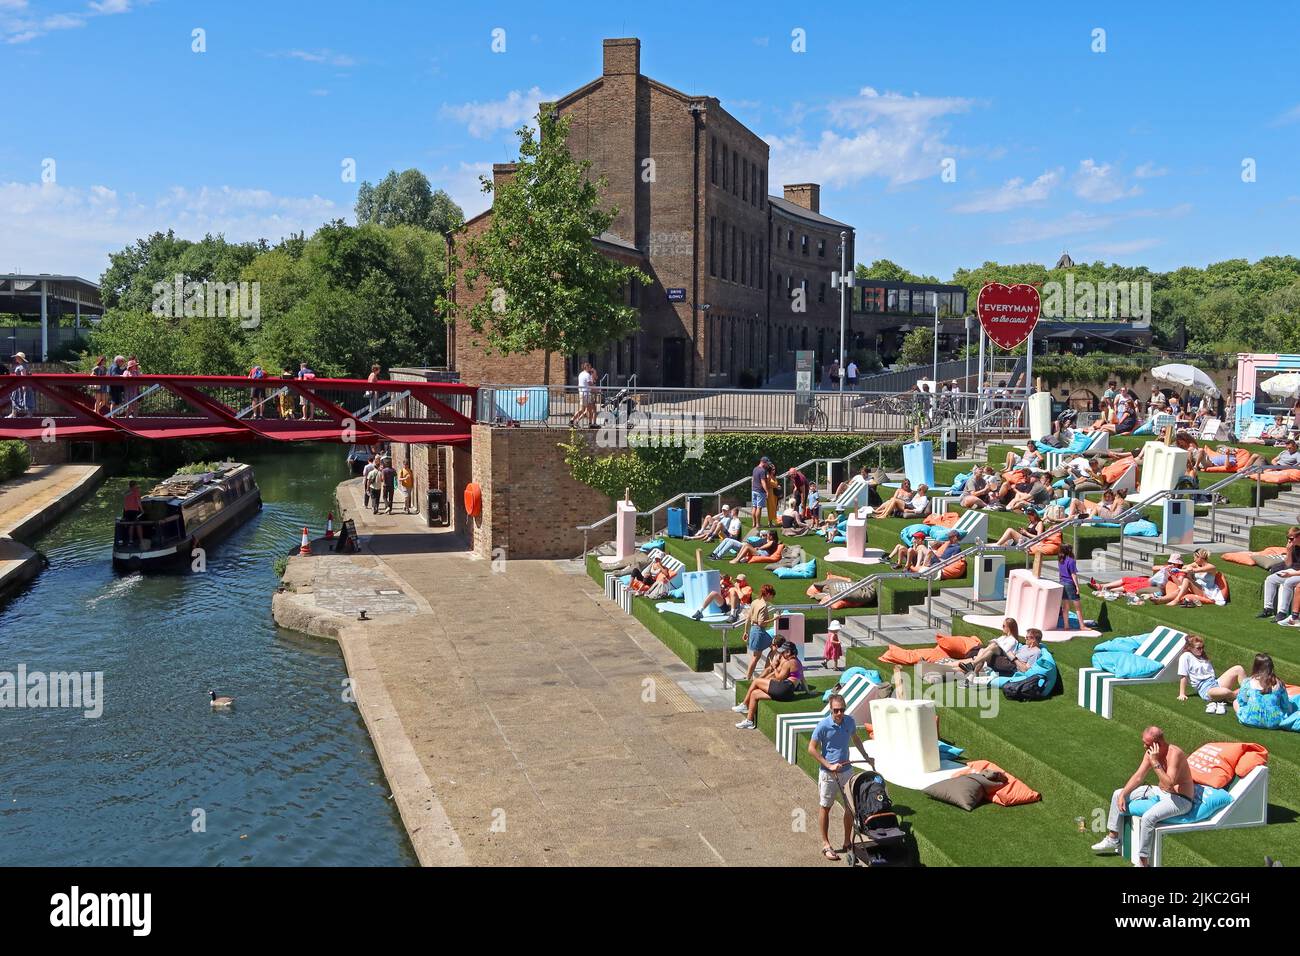 Everyman on the canal, Granary Square, Coal Drops Yard , Kings Cross, London, England, UK, N1C 4AB Stock Photo